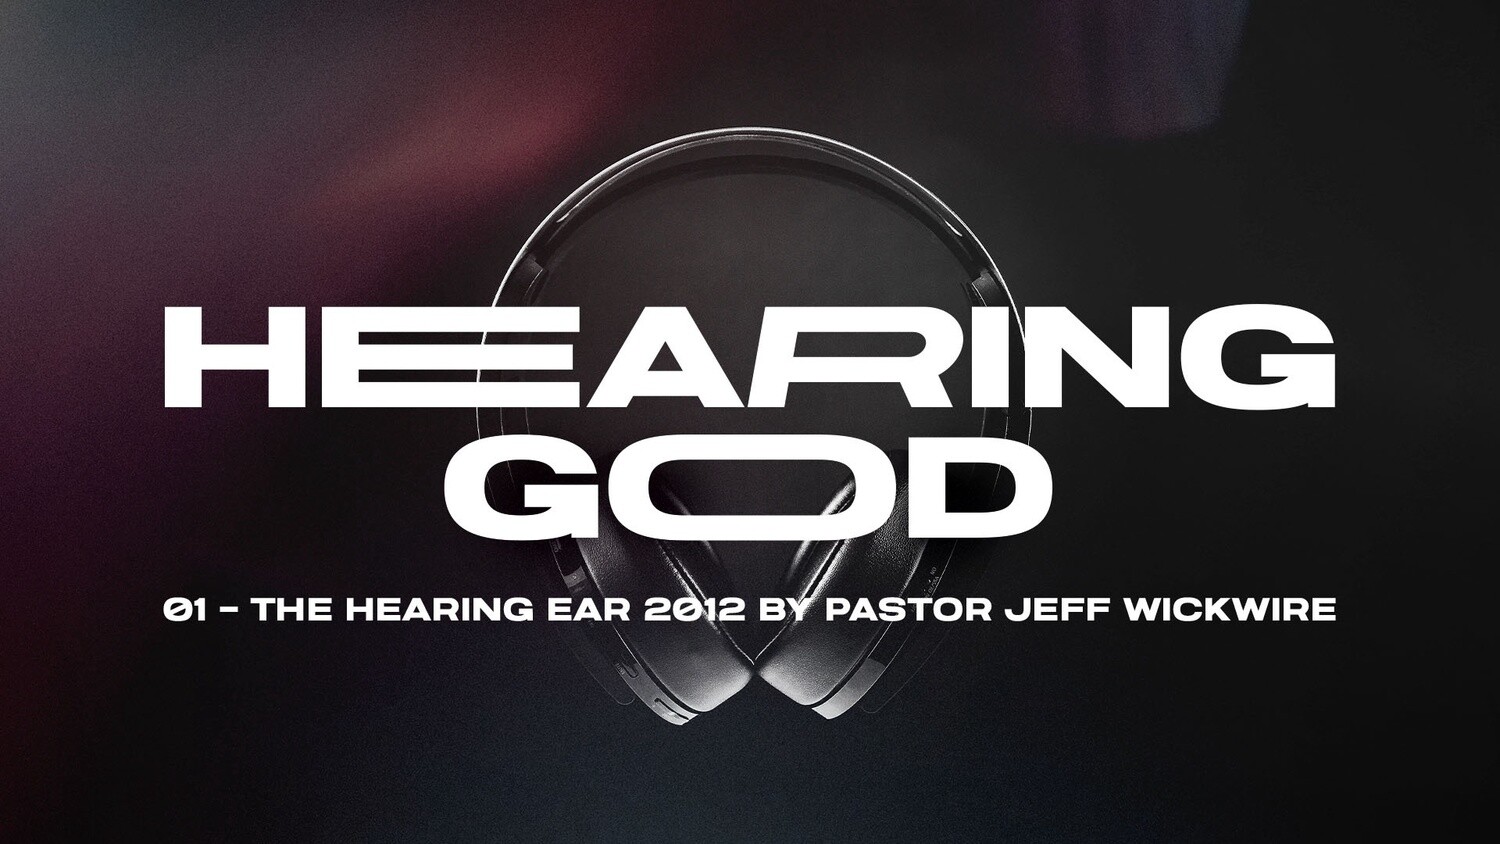 01 - The Hearing Ear 2012 By Pastor Jeff Wickwire